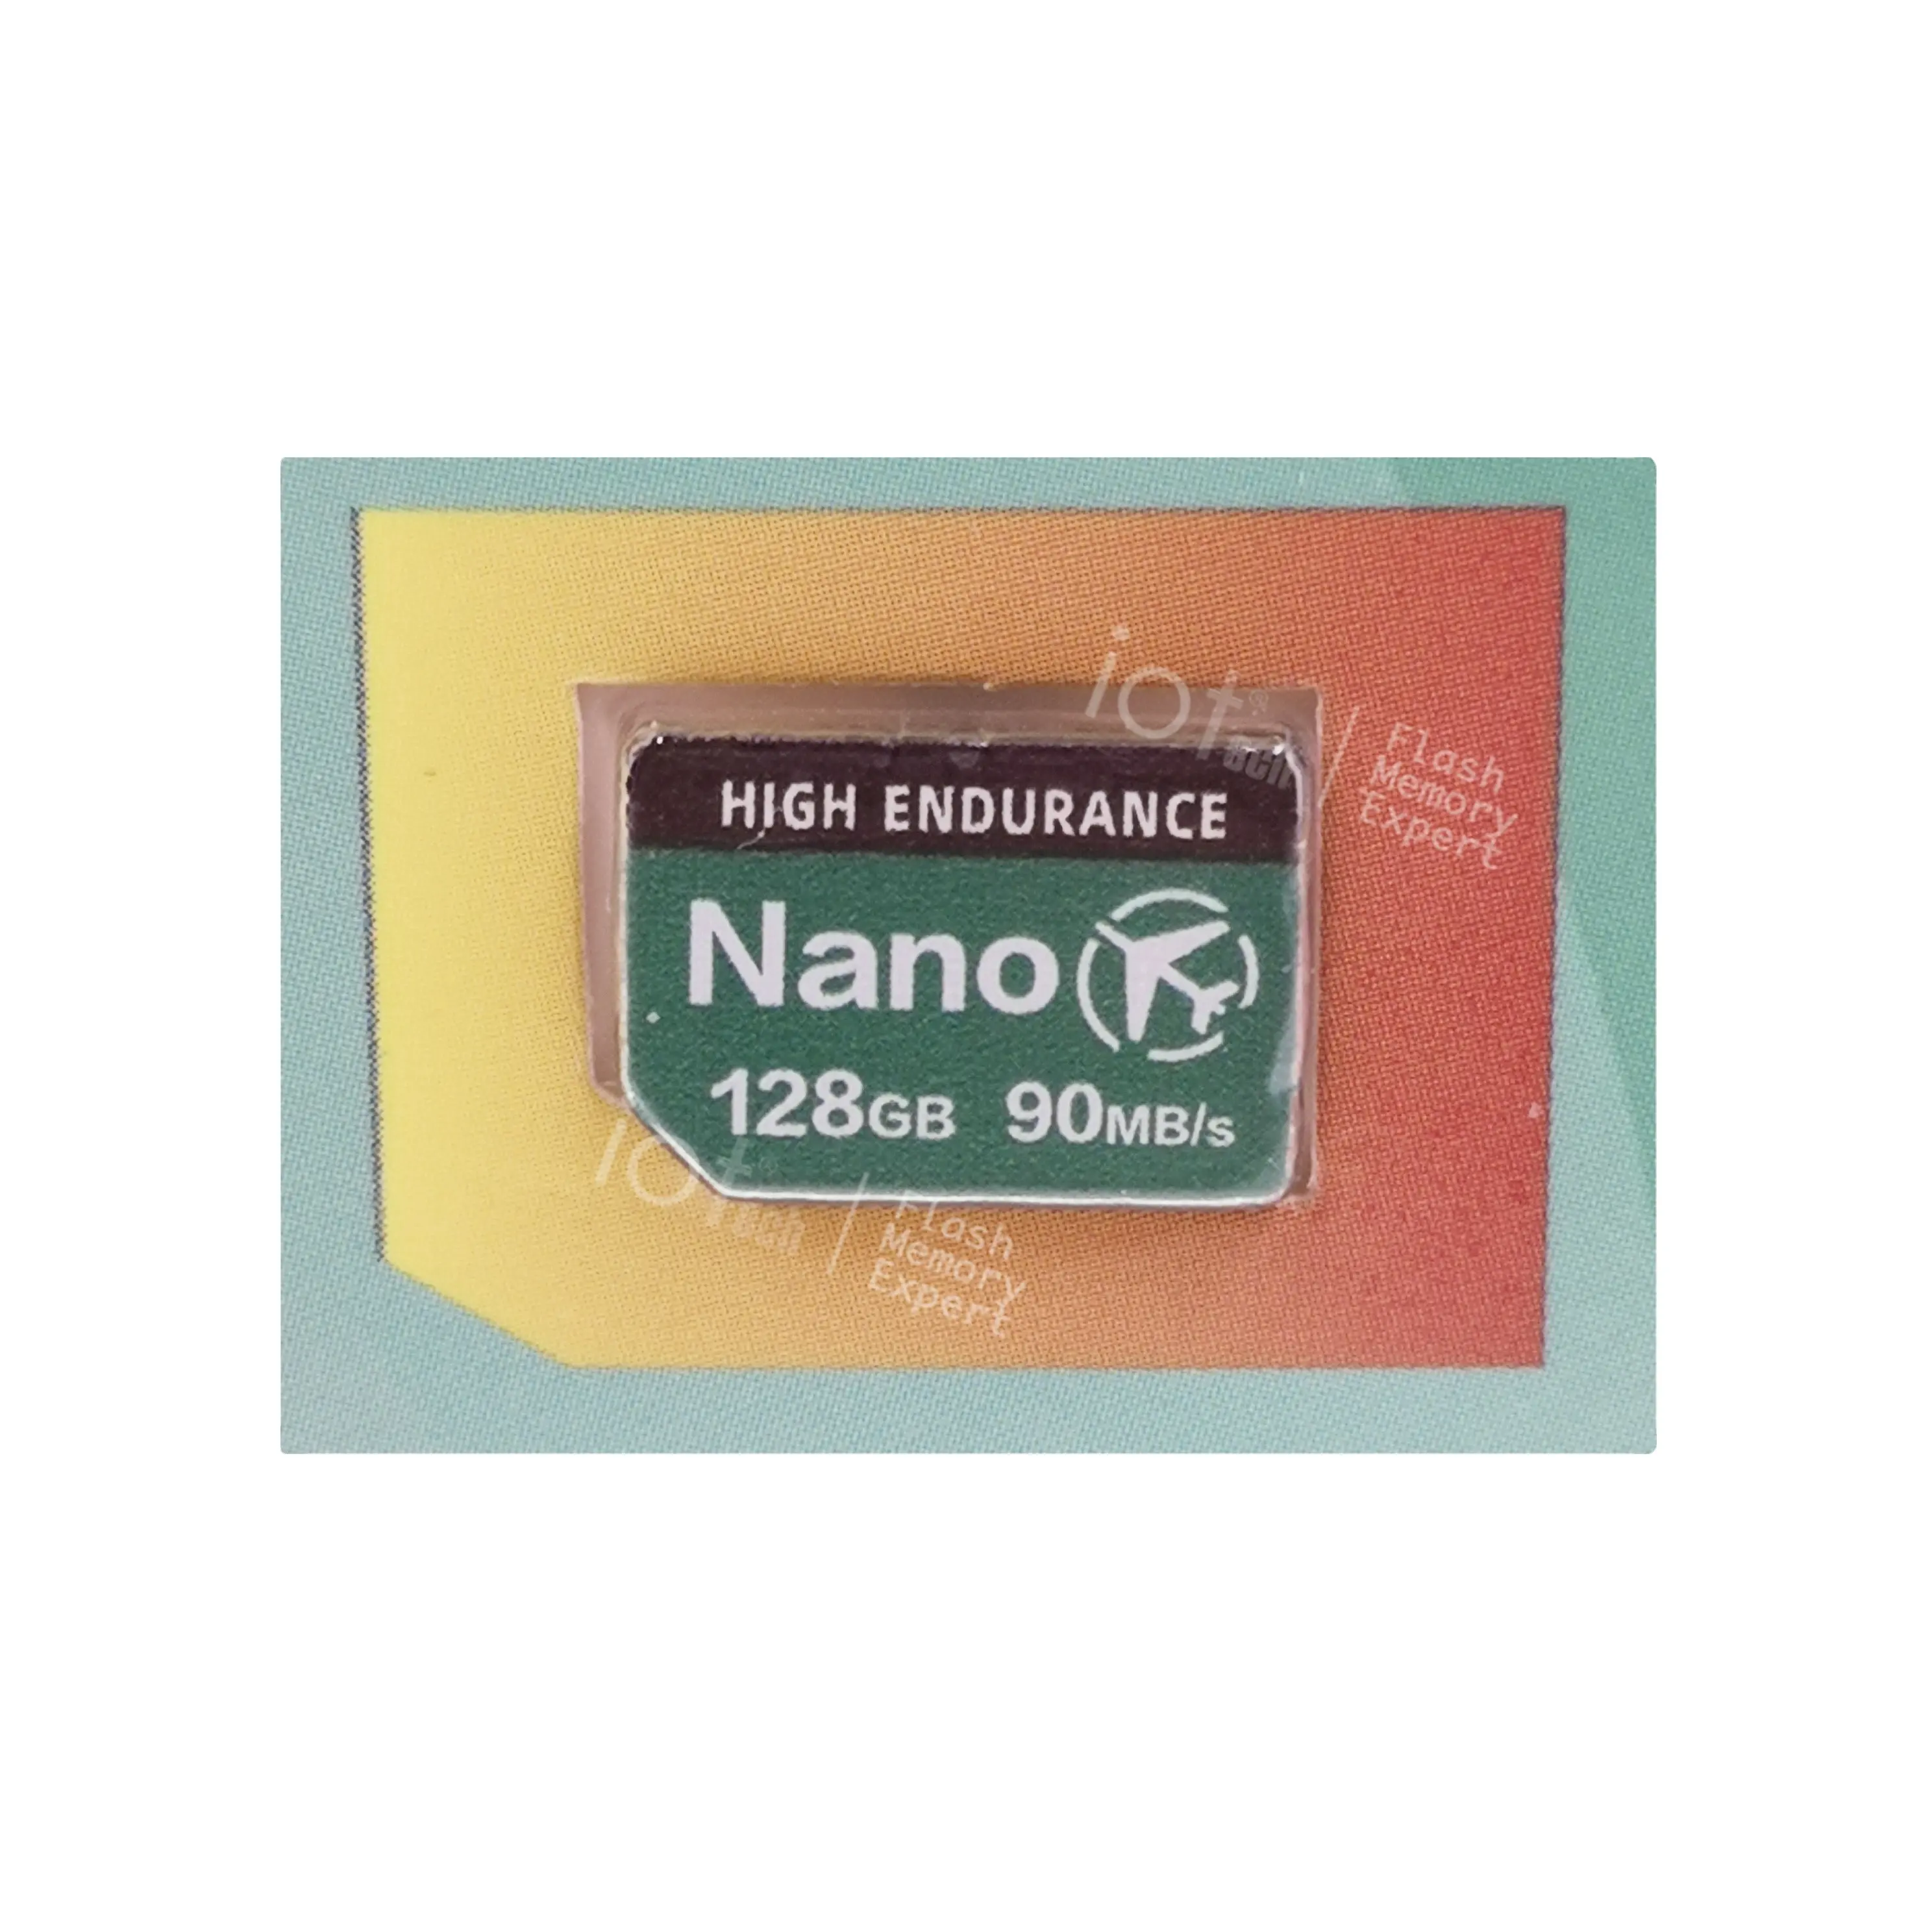 Tarjeta de memoria NM/nano para teléfono móvil, OEM, 128GB, 90 MB/S, de alta resistencia